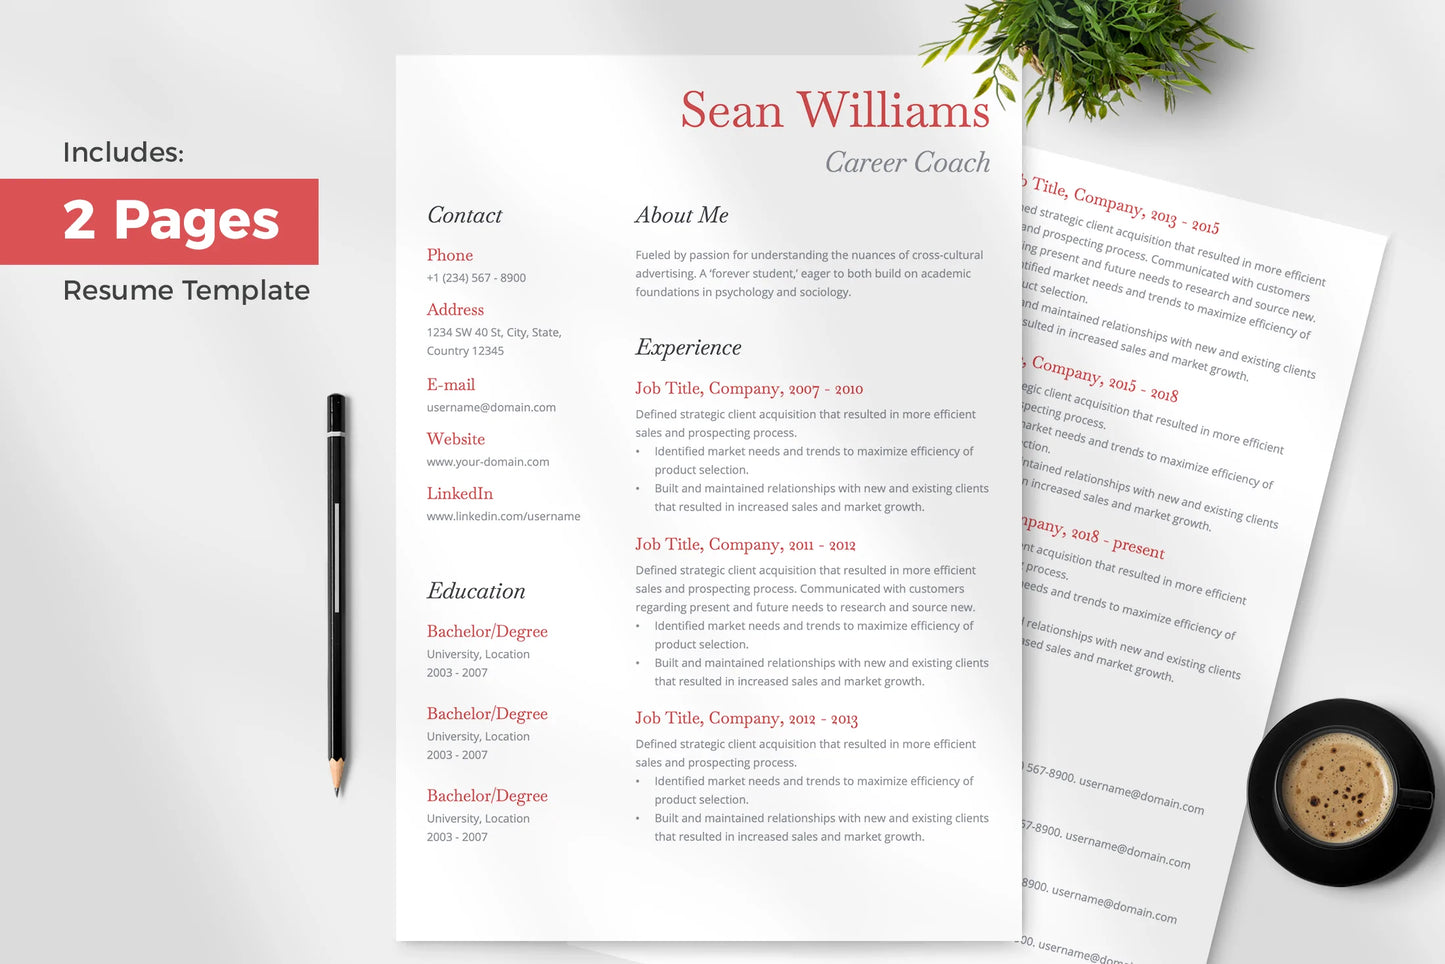 Elijah - Resume Infographic Templates PowerPoint slides